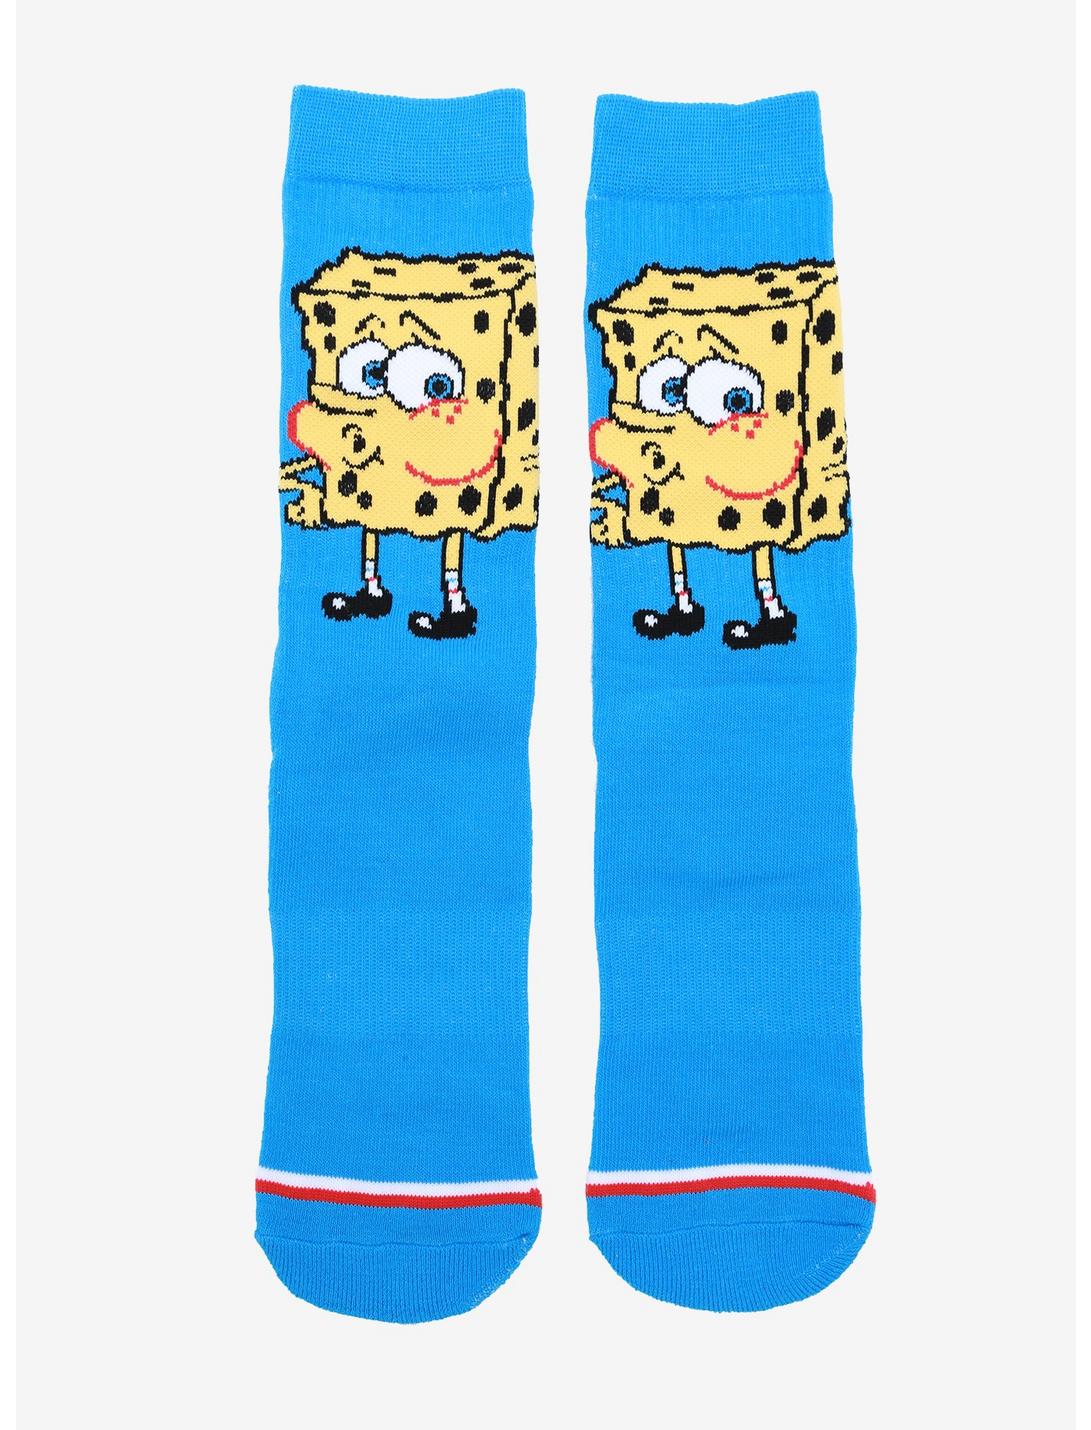 SpongeBob SquarePants Naked Crew Socks, , hi-res